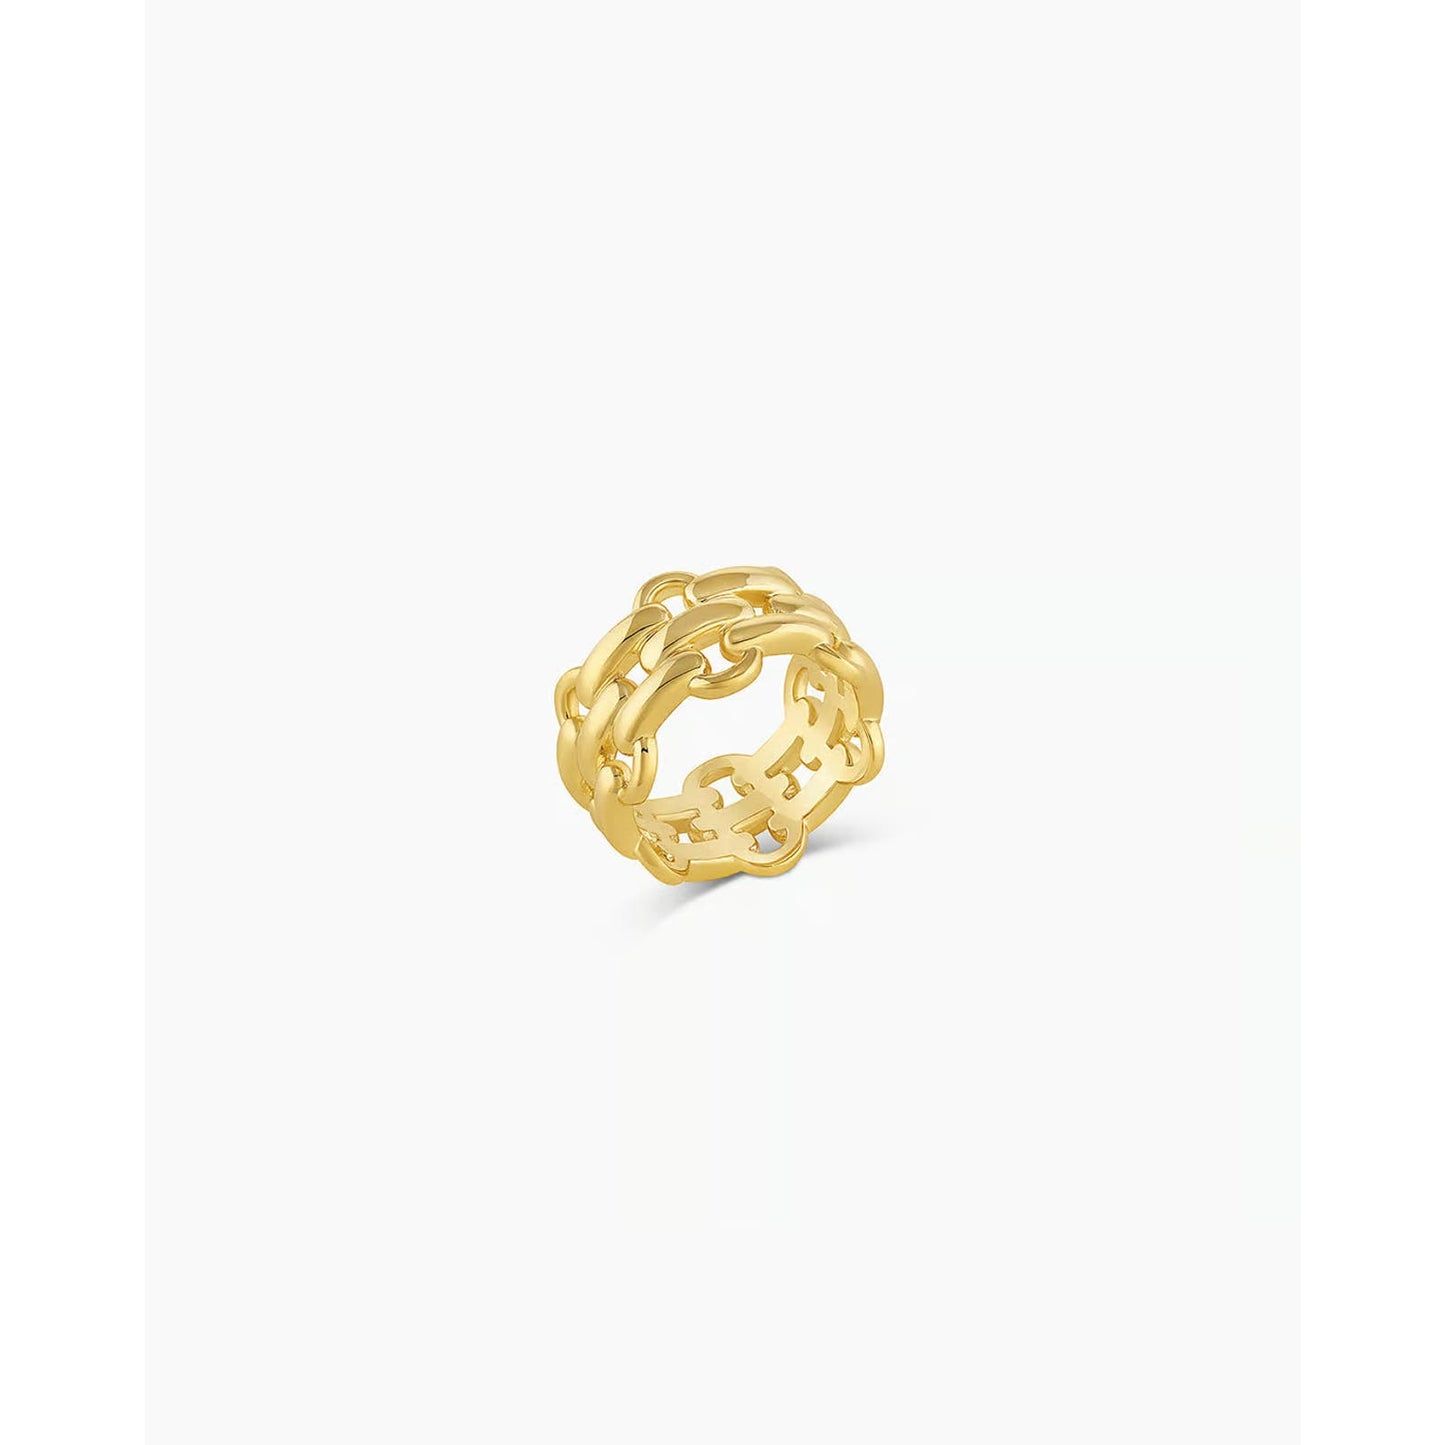 Gorjana Brooklyn Statement Ring 18k Gold Plated Chain Link Design Size 7